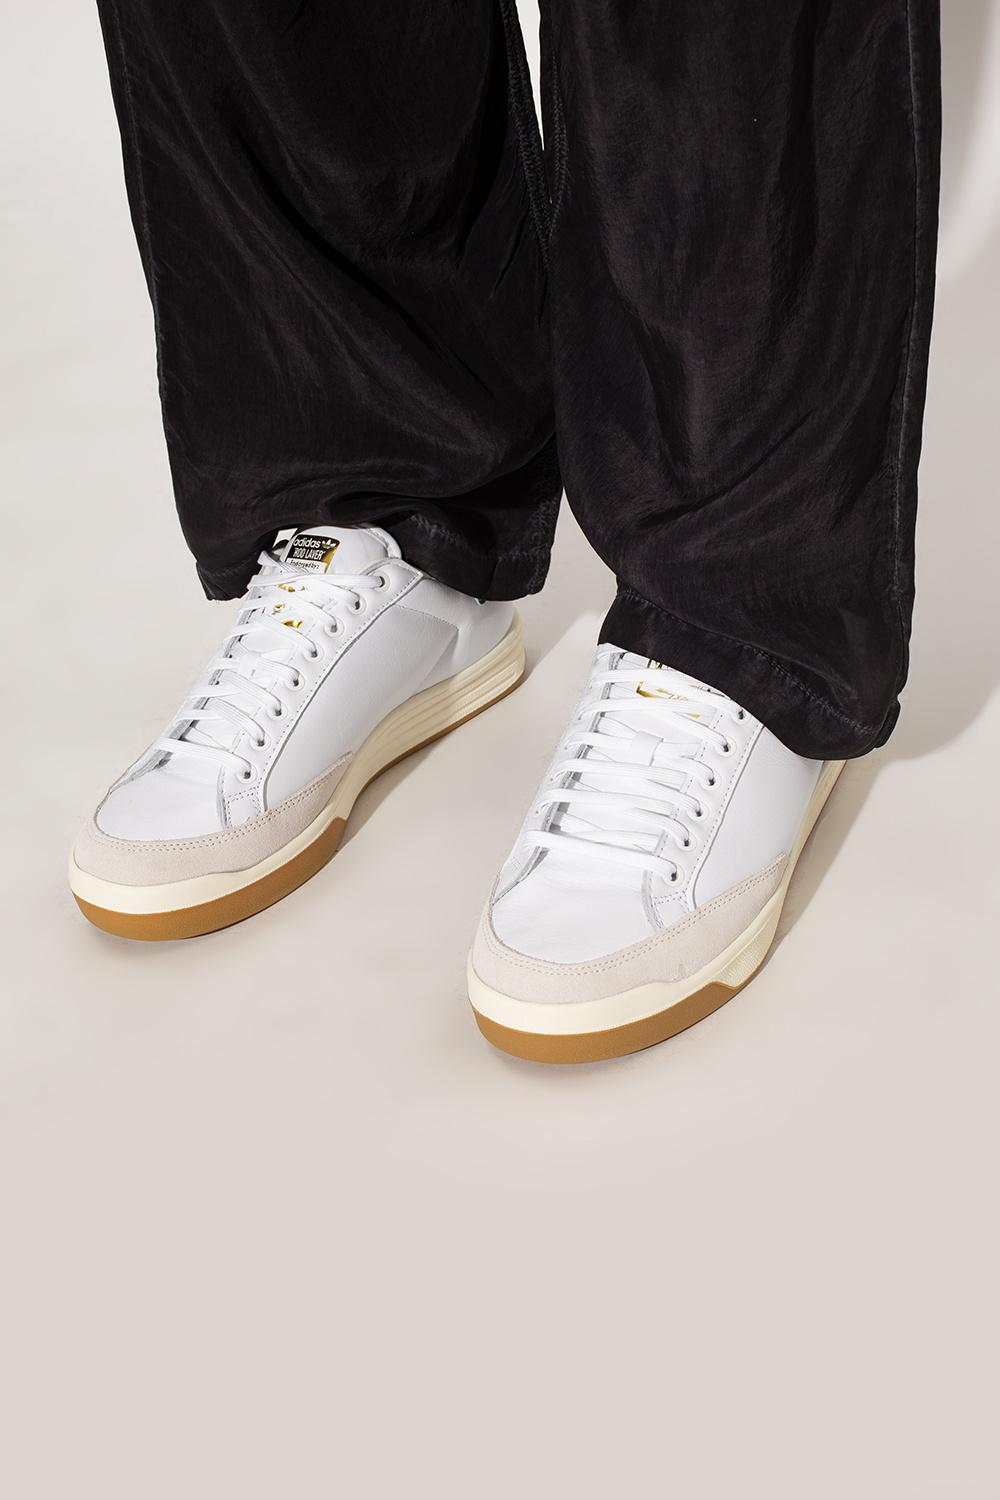 Originals 'rod Laver' Sneakers in White for Men Lyst